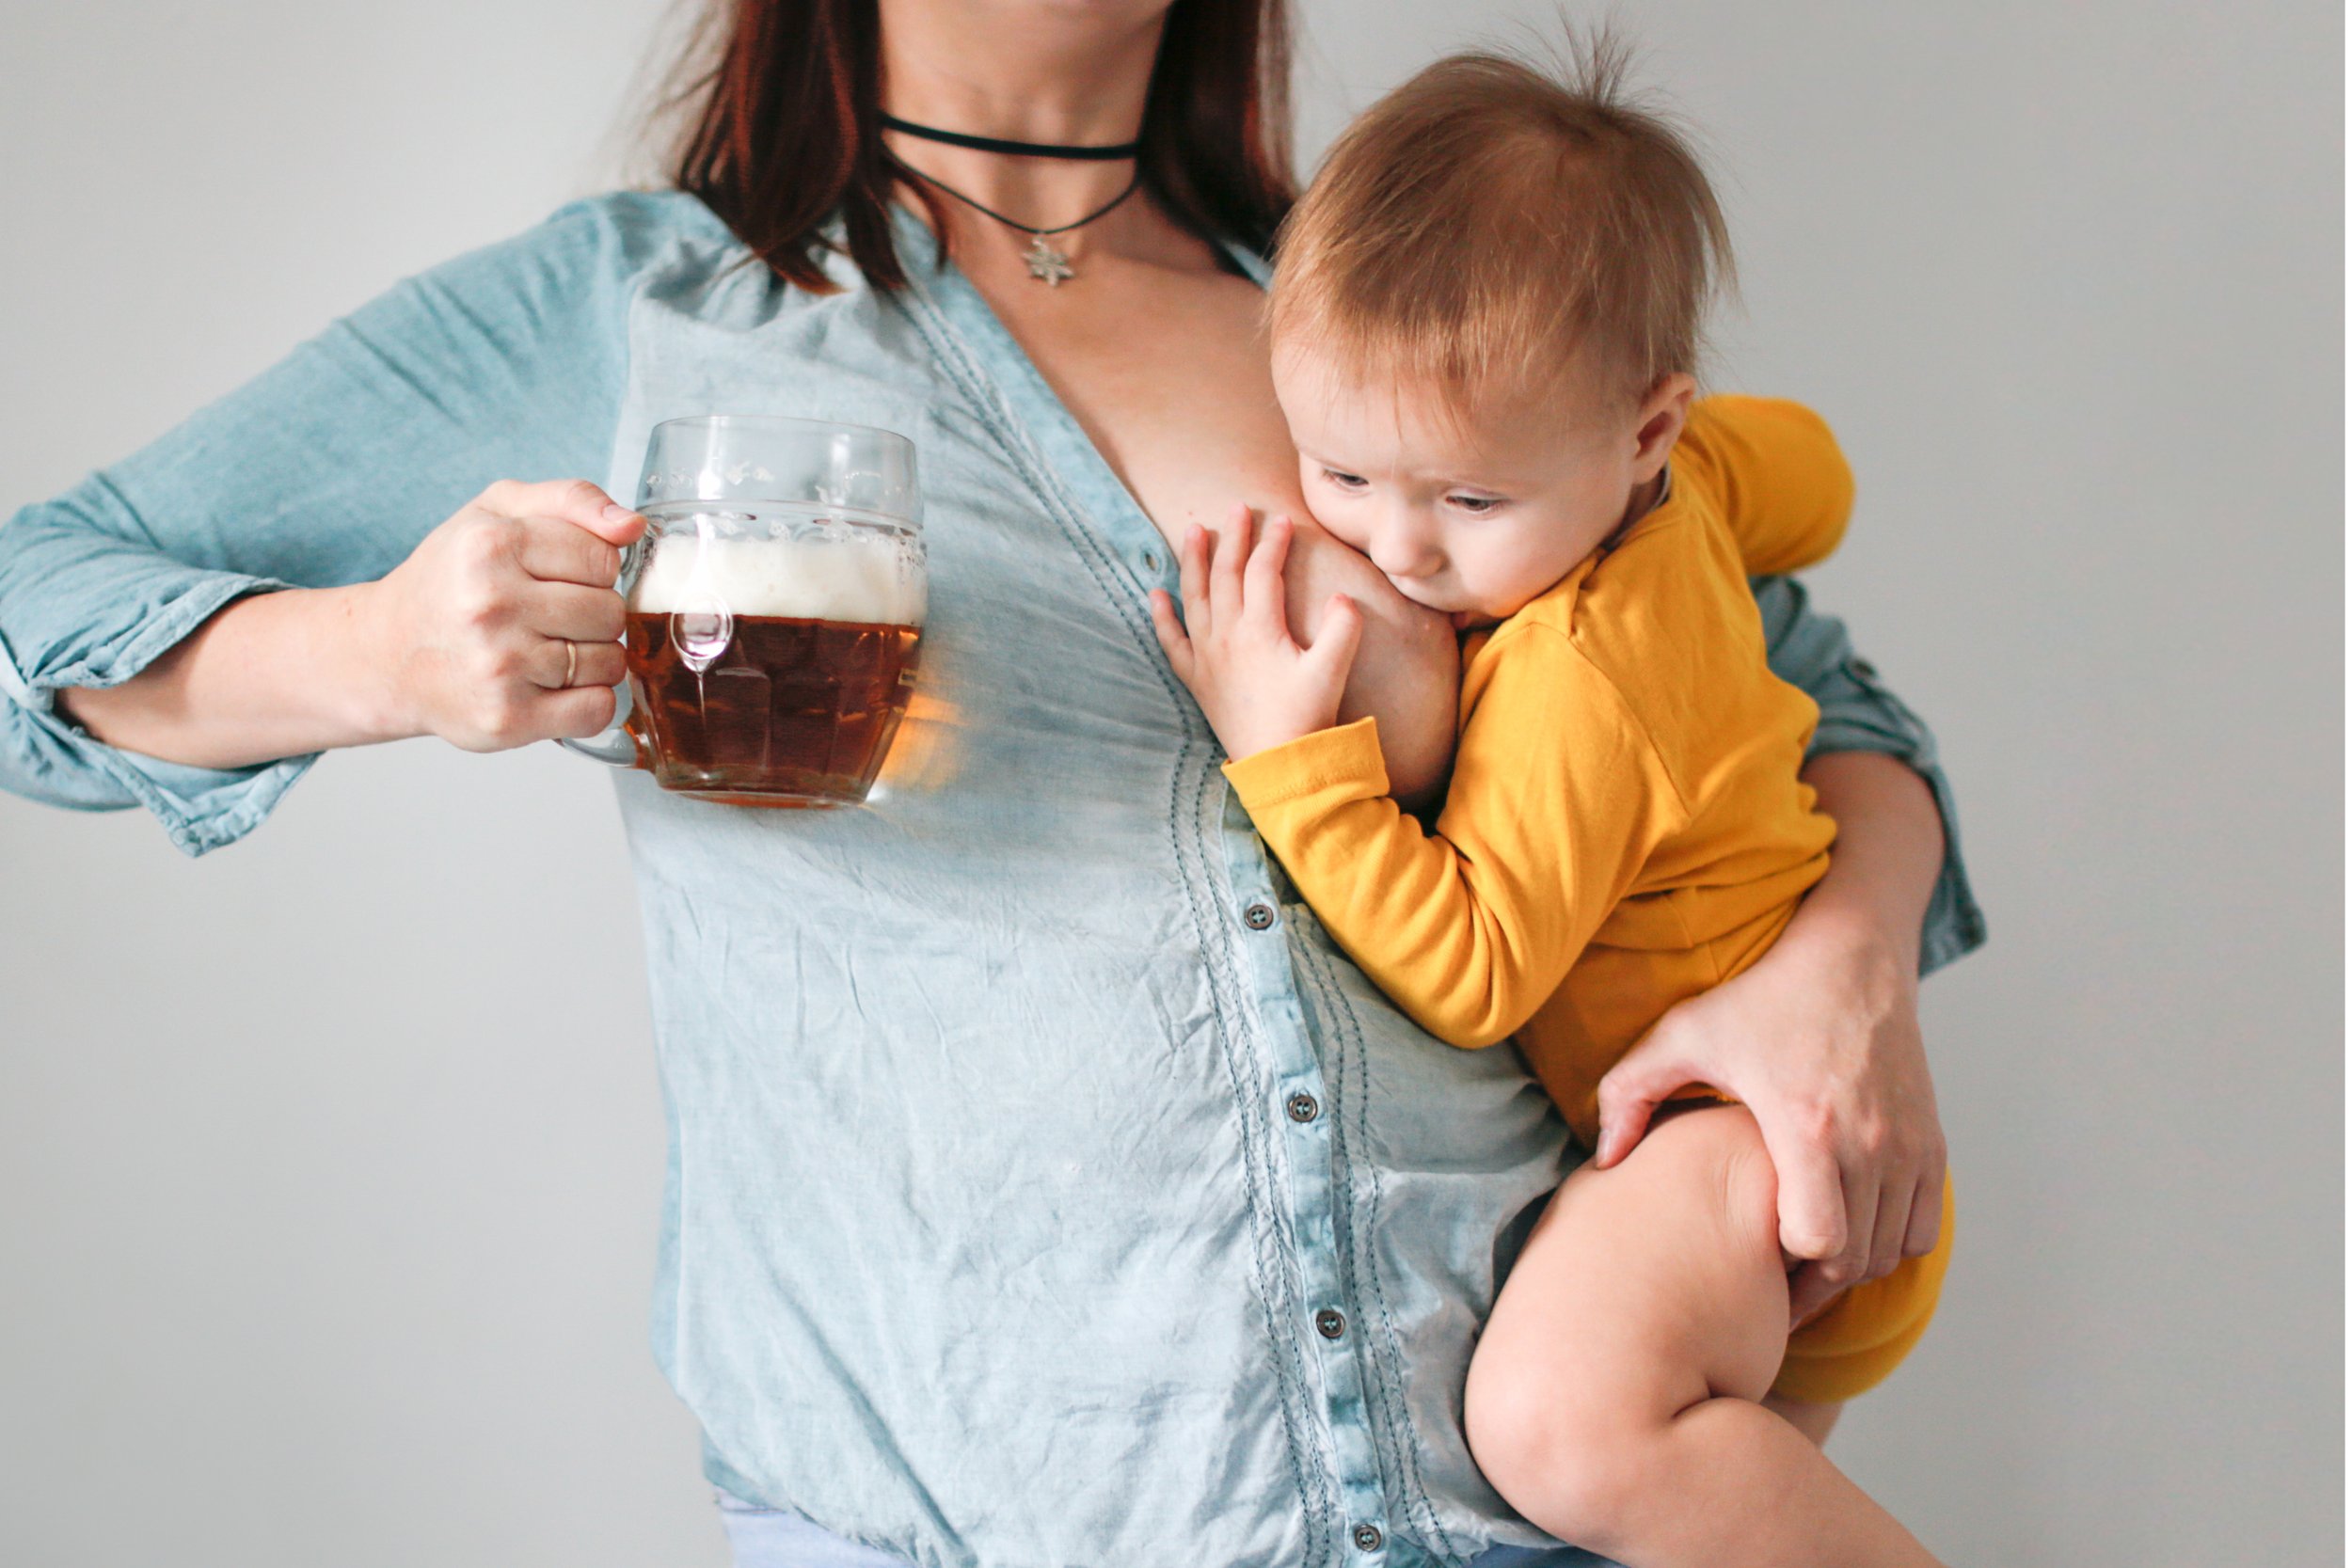 Drink Alcohol When Breastfeeding